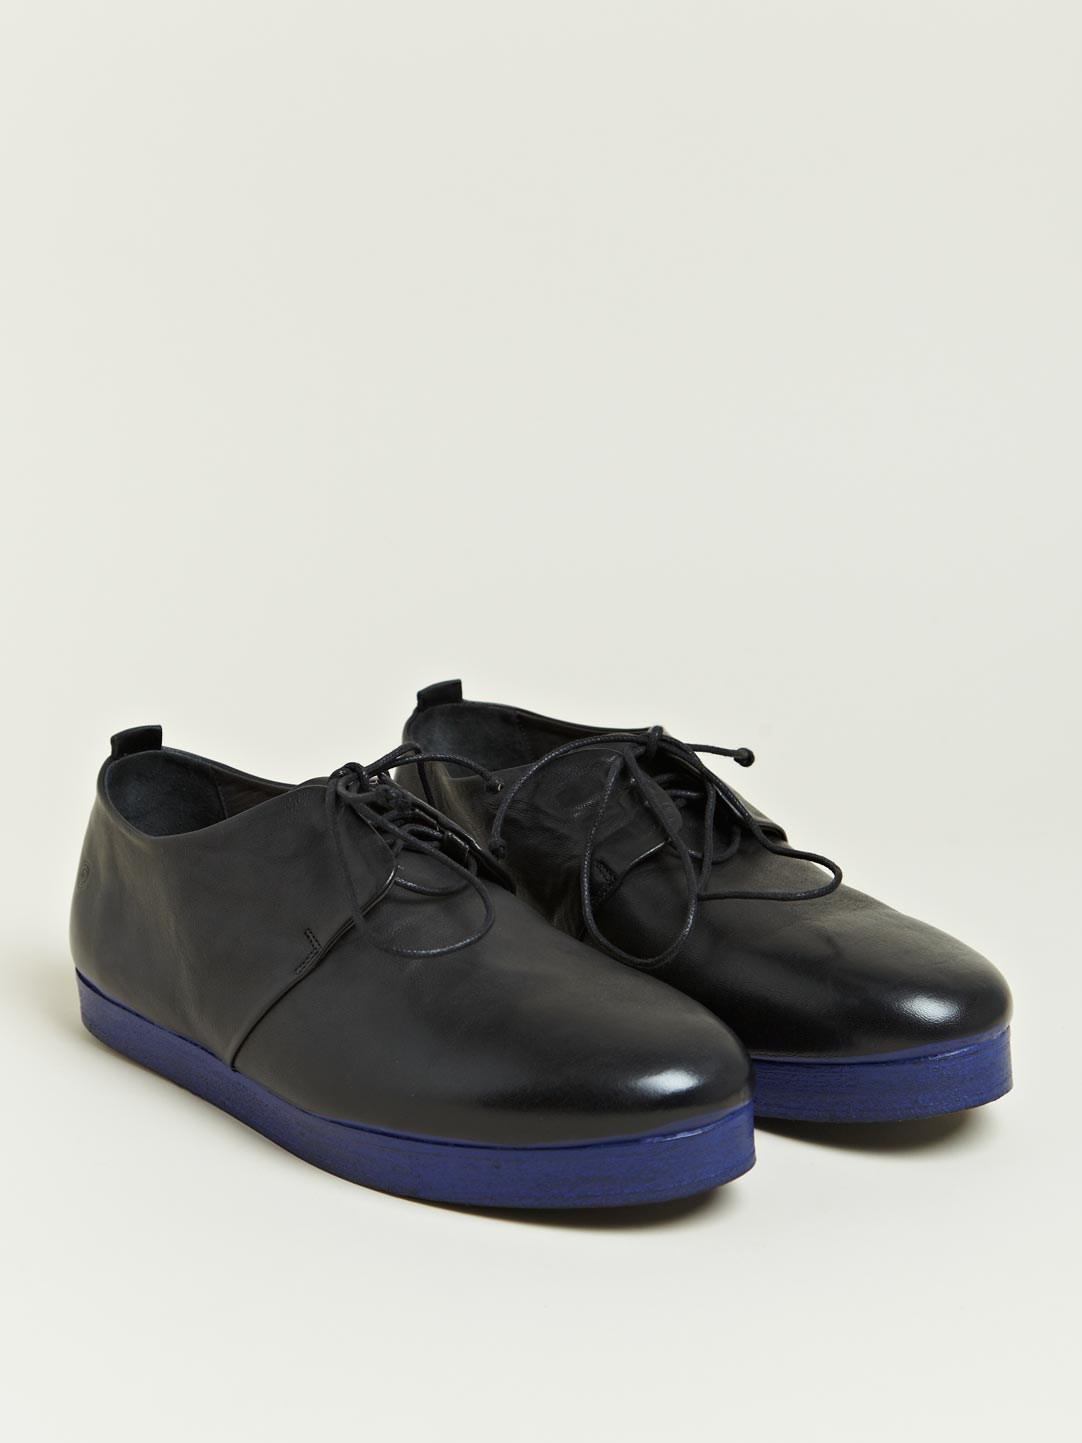 Lyst - Marsèll Marsell Mens Fiore Marcio Blocco Shoes in Black for Men